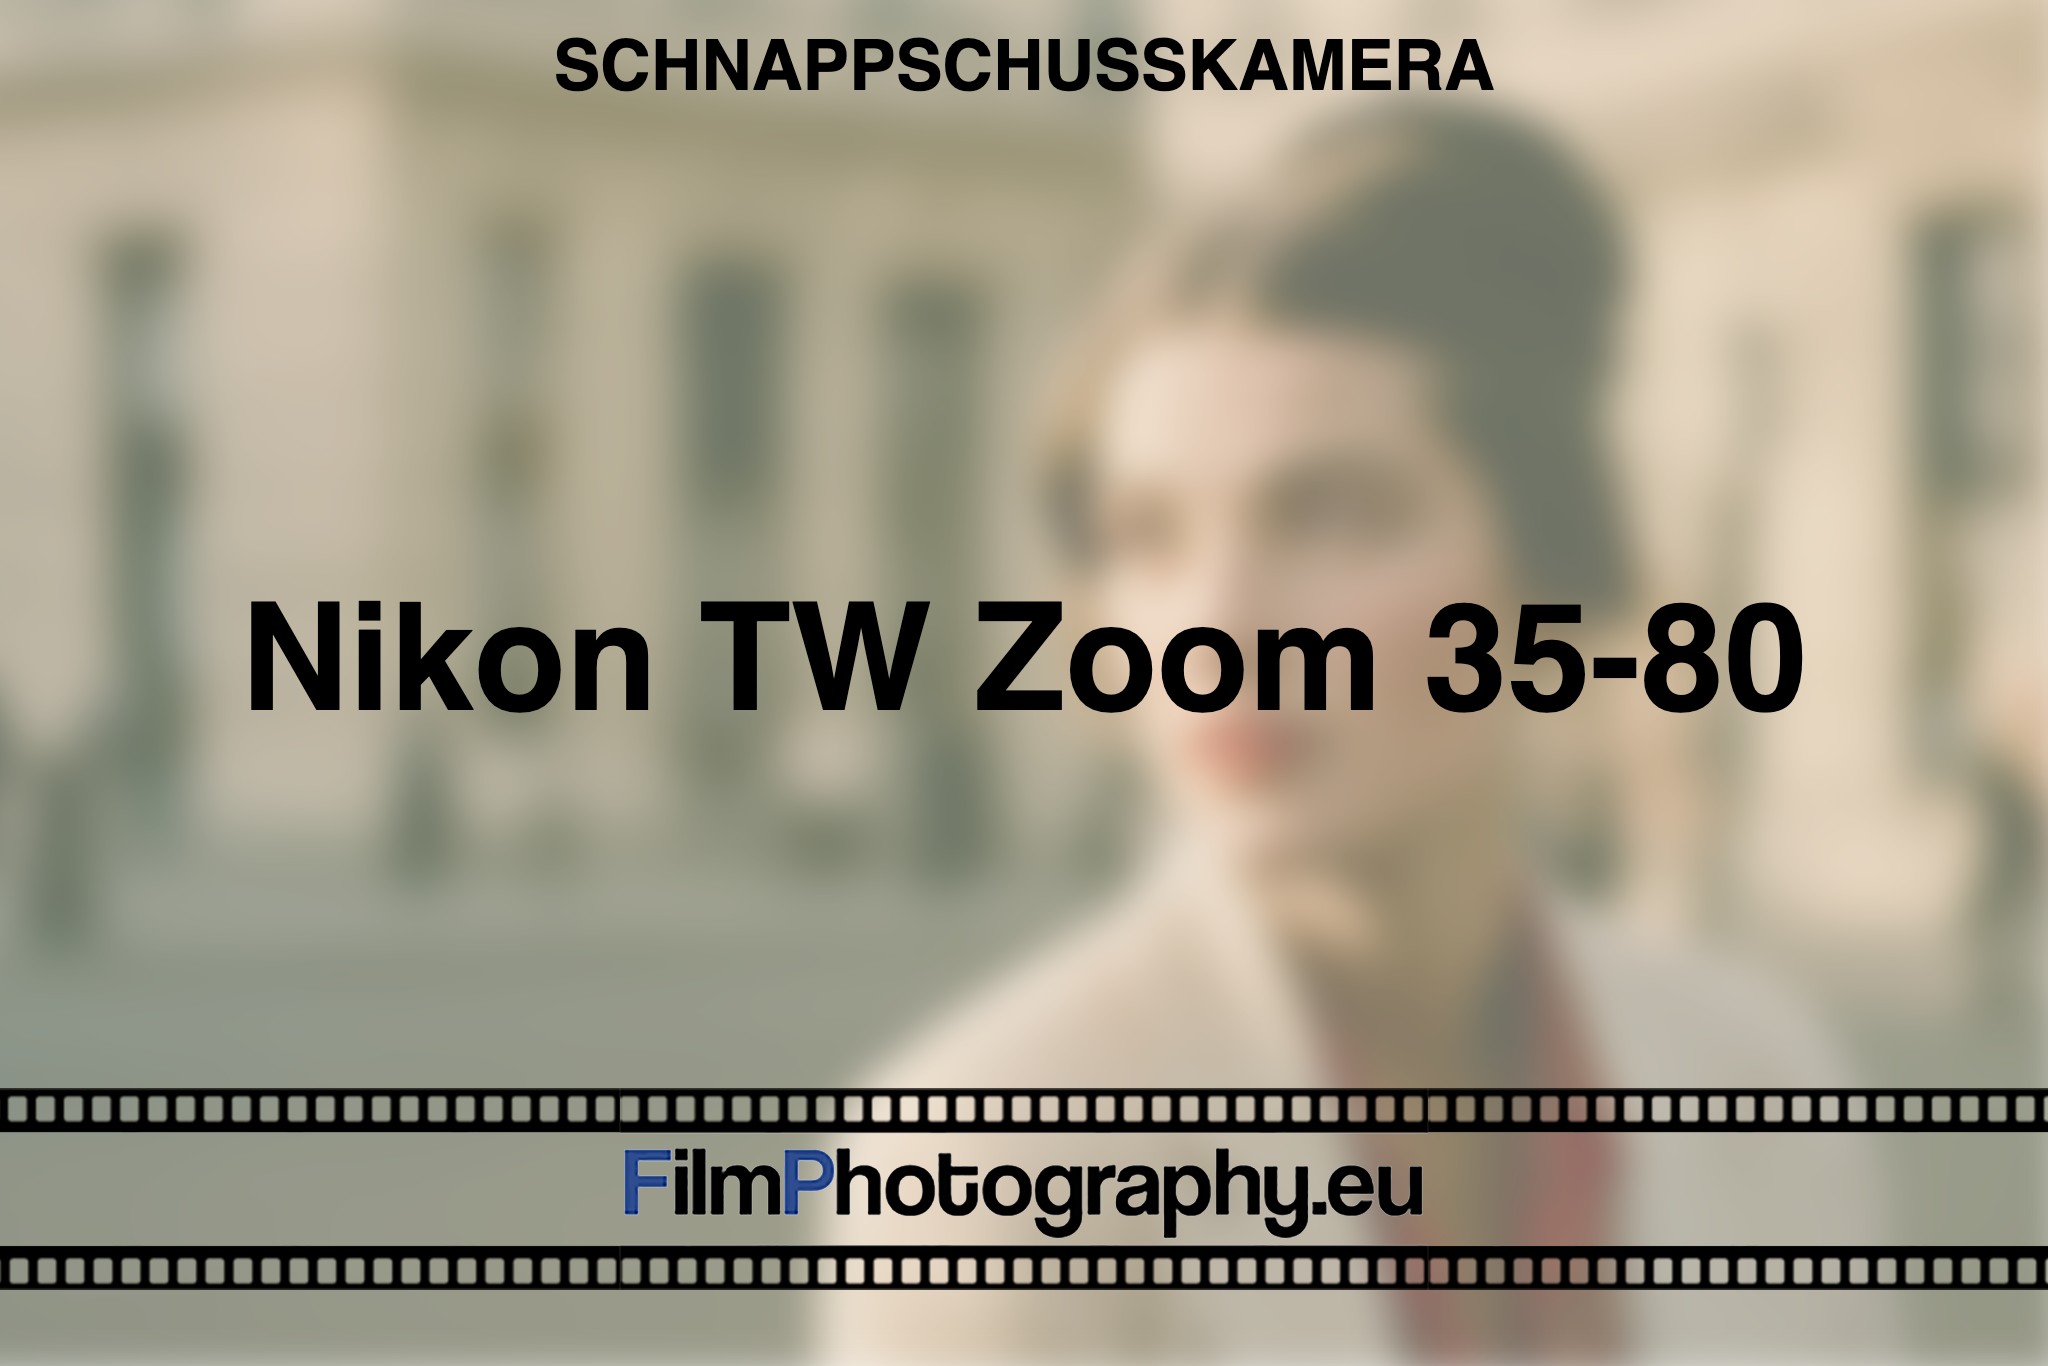 nikon-tw-zoom-35-80-schnappschusskamera-bnv